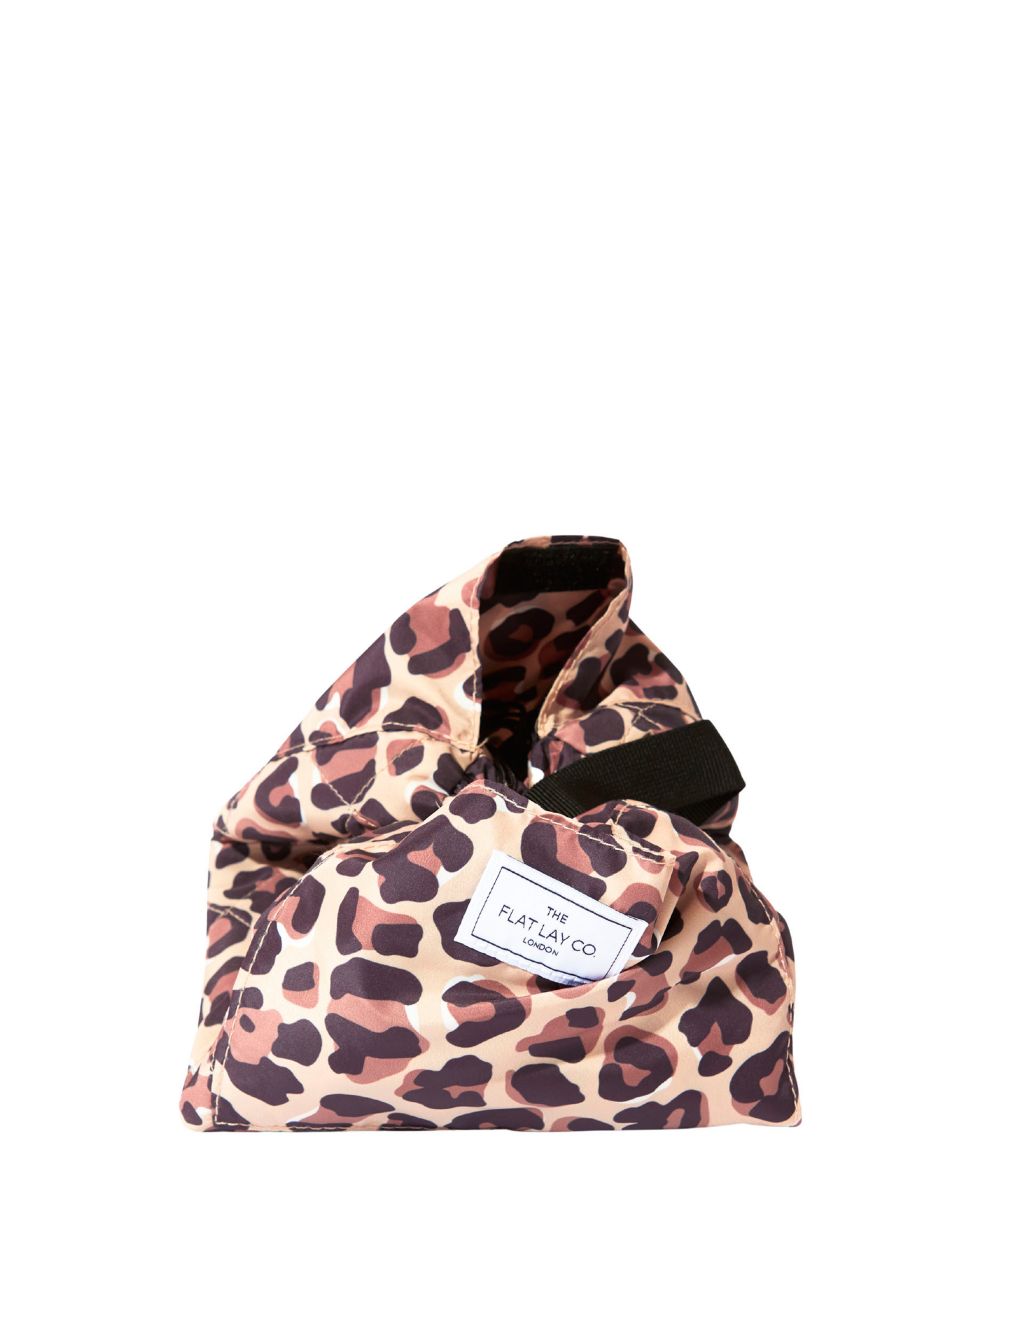 Open Flat Makeup Bag In Leopard Print 2 of 5